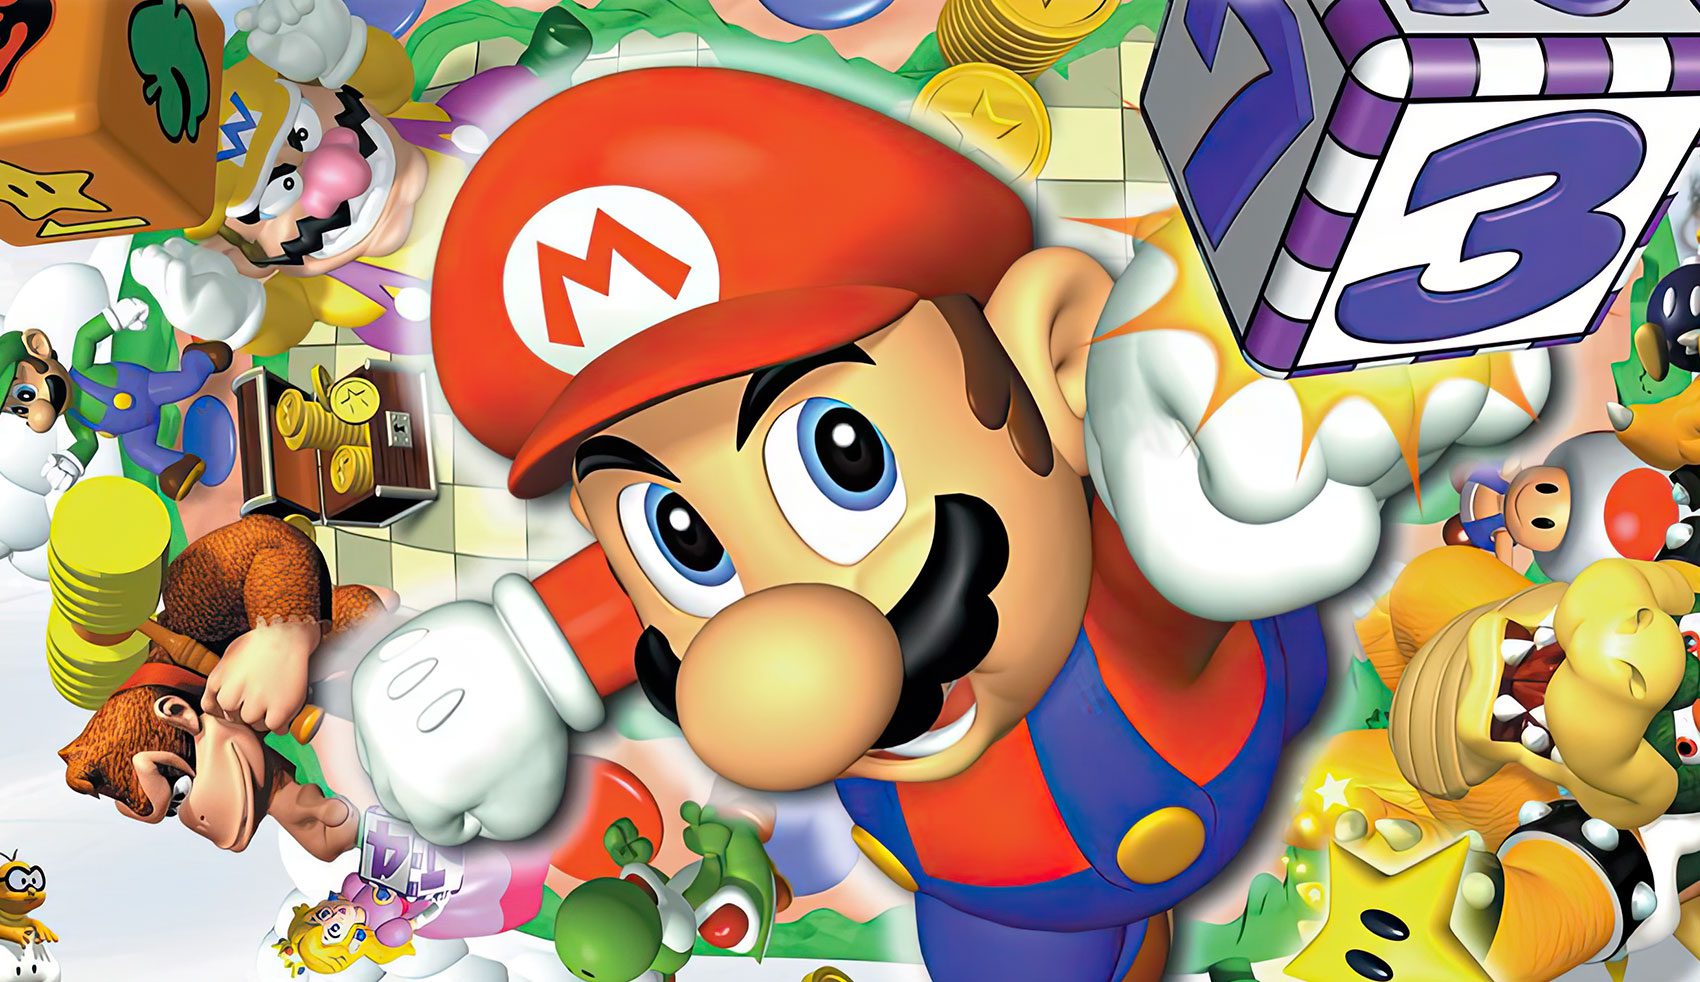 Jogo Super Mario Party SuperStars - Switch - Brasil Games